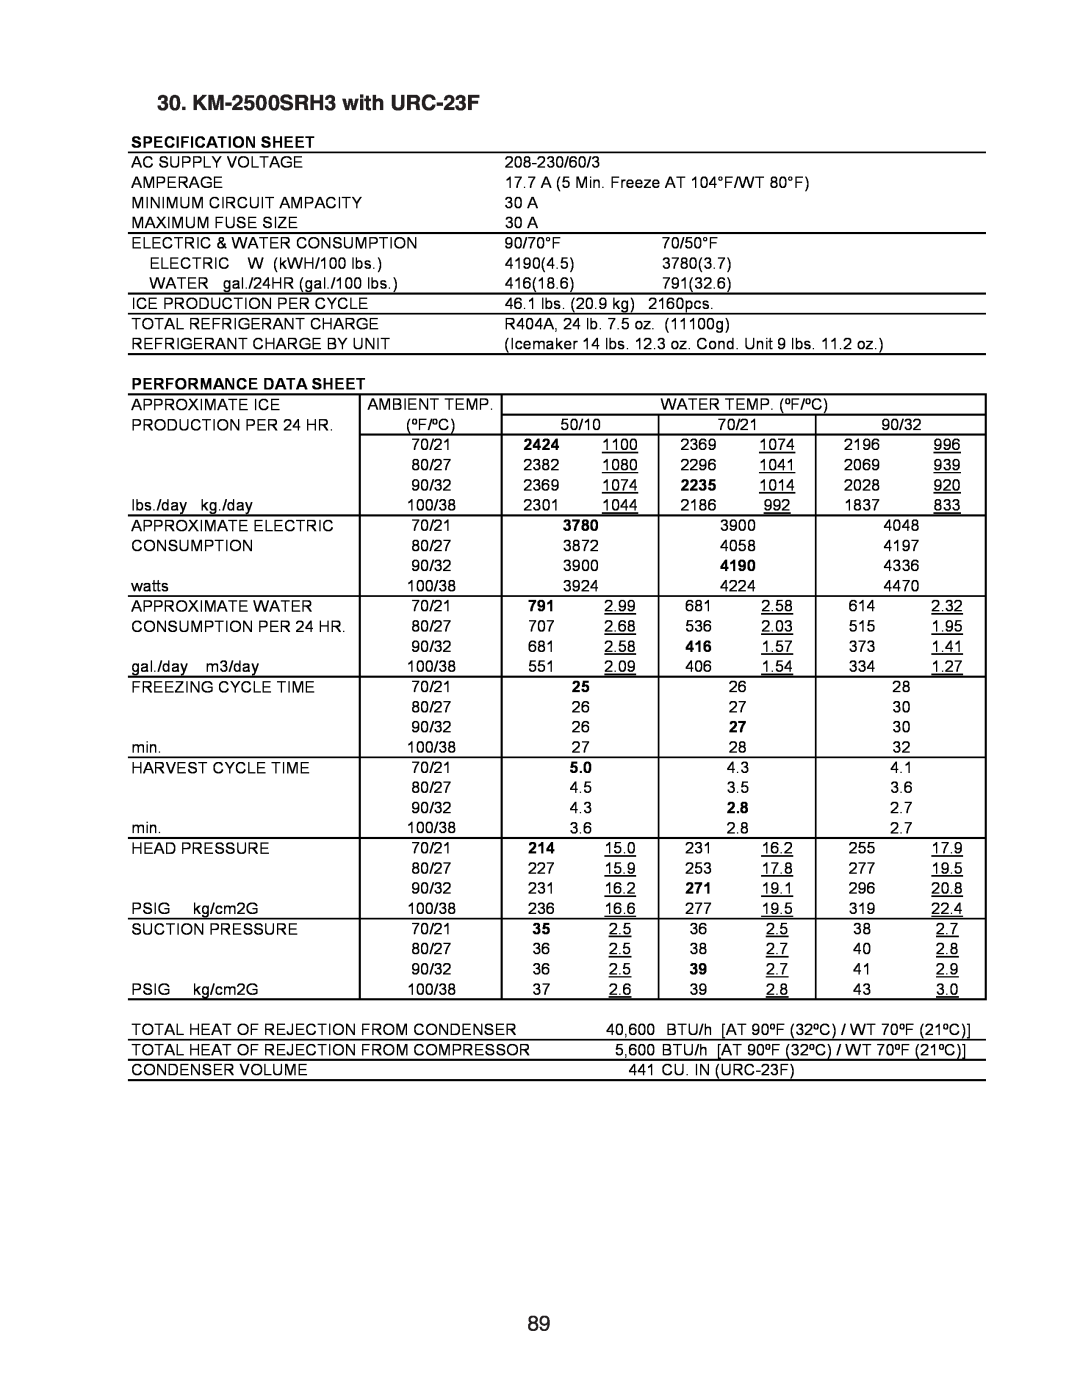 Hoshizaki SRH/3 KM-1900SAH/3, KM-1301SAH/3 KM-2500SRH3 with URC-23F, Specification Sheet, Performance Data Sheet, 3780 